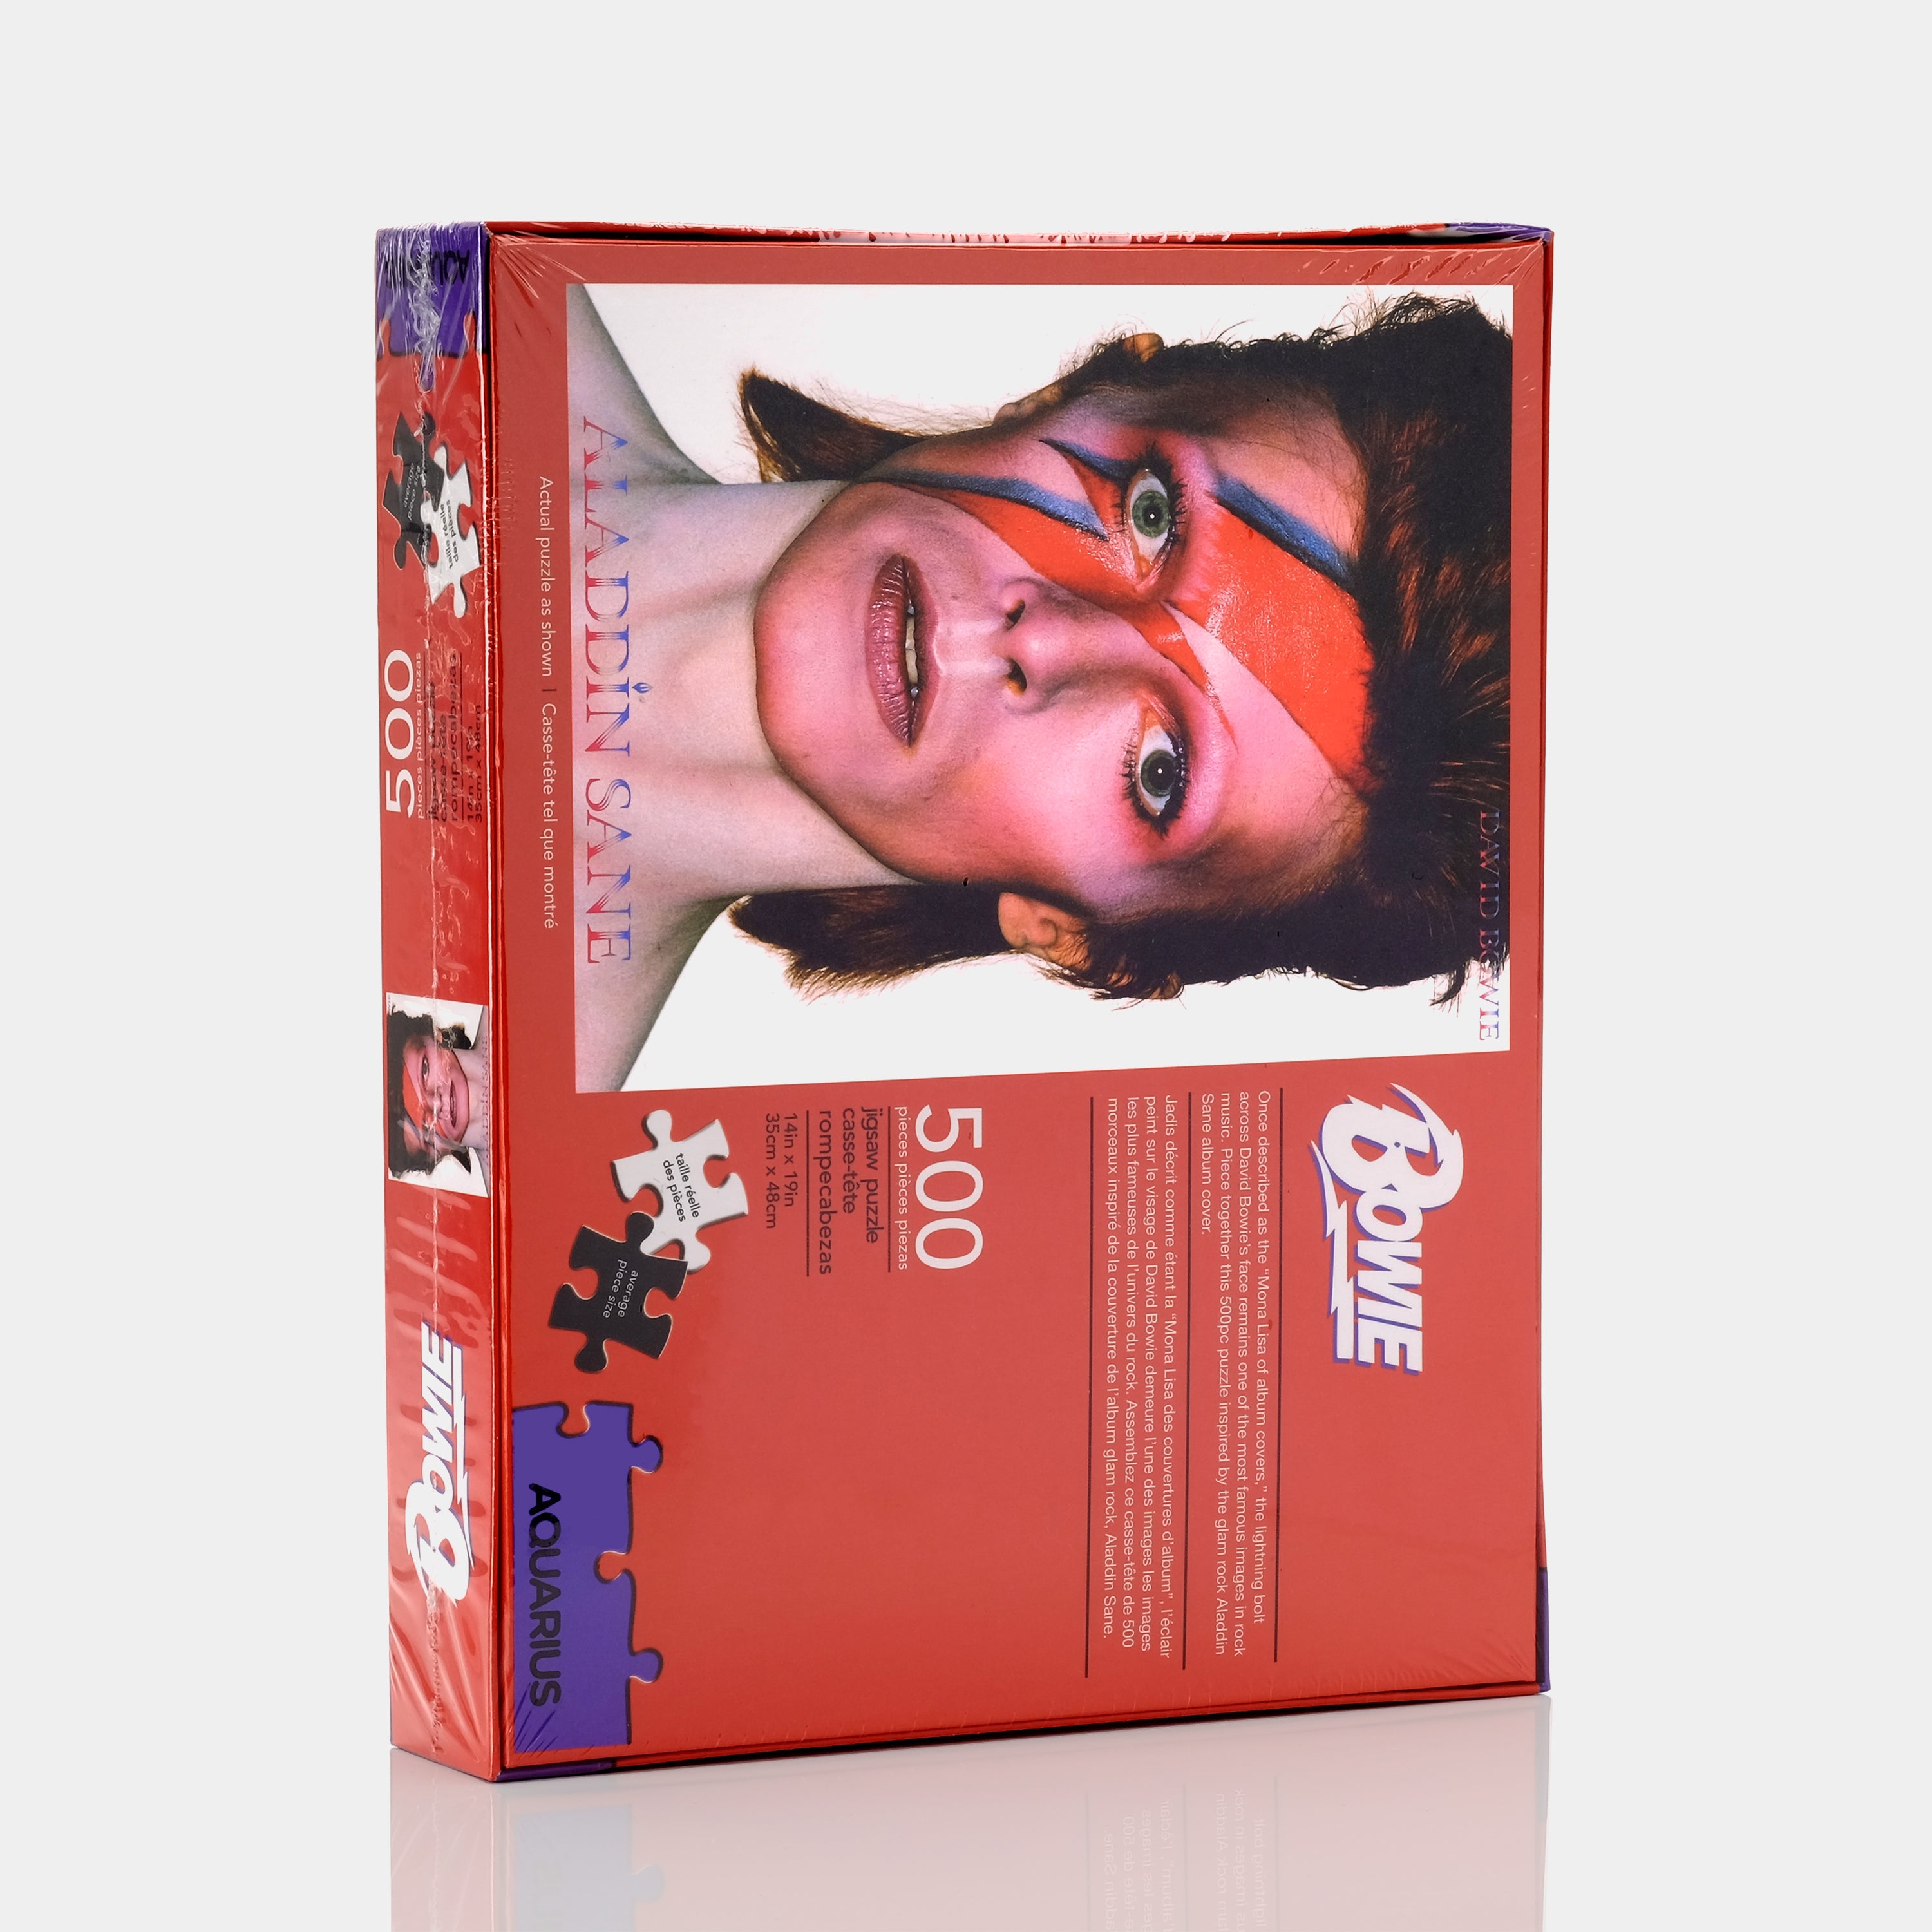 David Bowie "Aladdin Sane" 500 Piece Puzzle